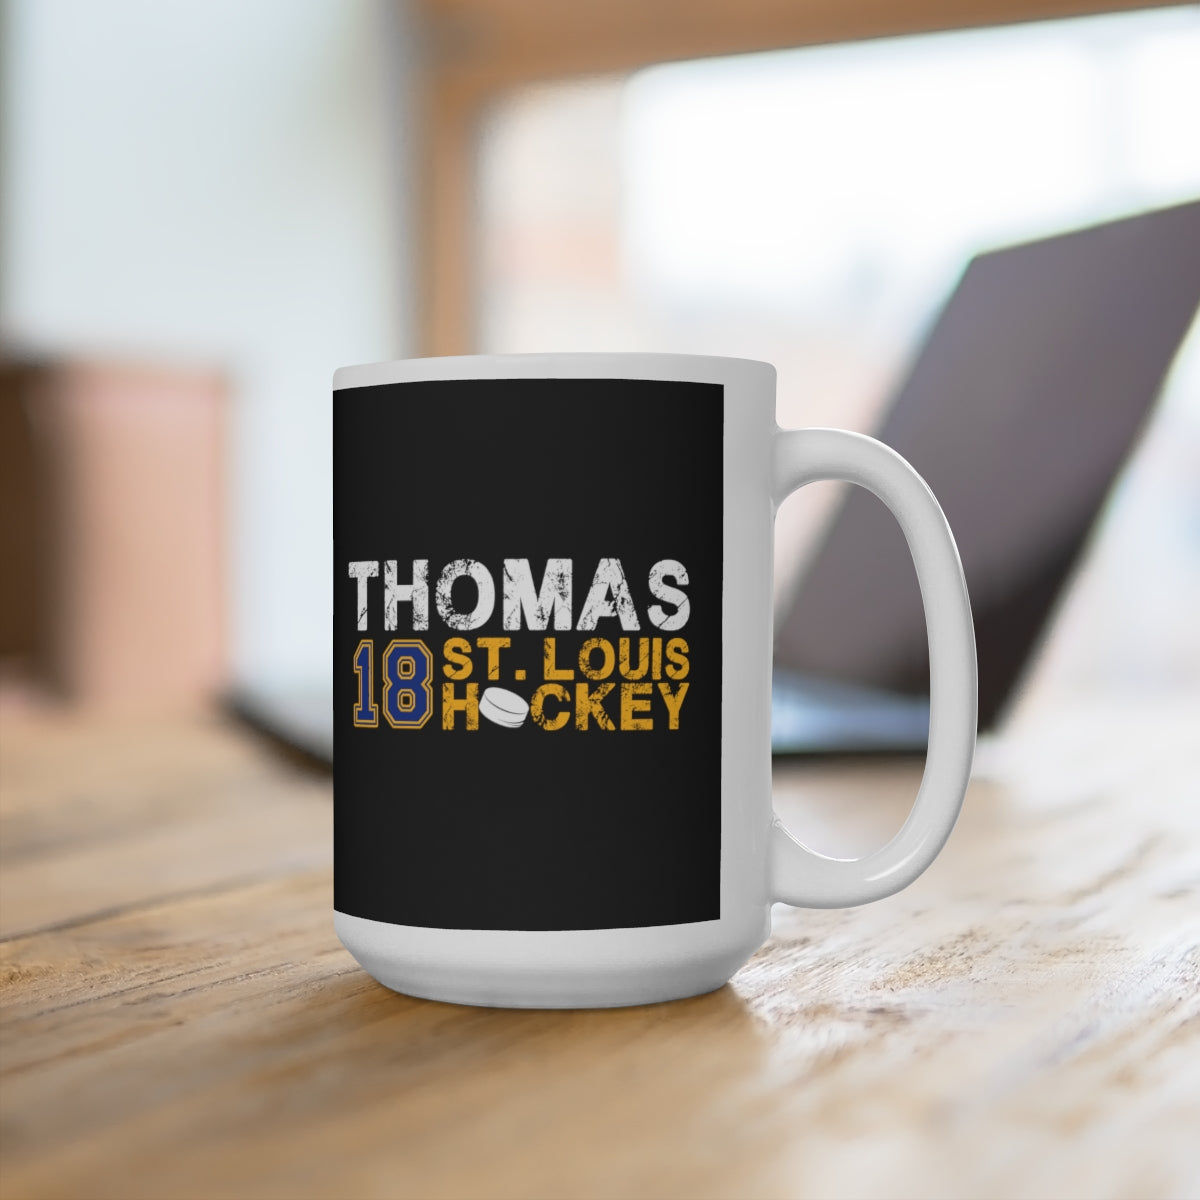 Thomas 18 St. Louis Hockey Ceramic Coffee Mug In Black, 15oz